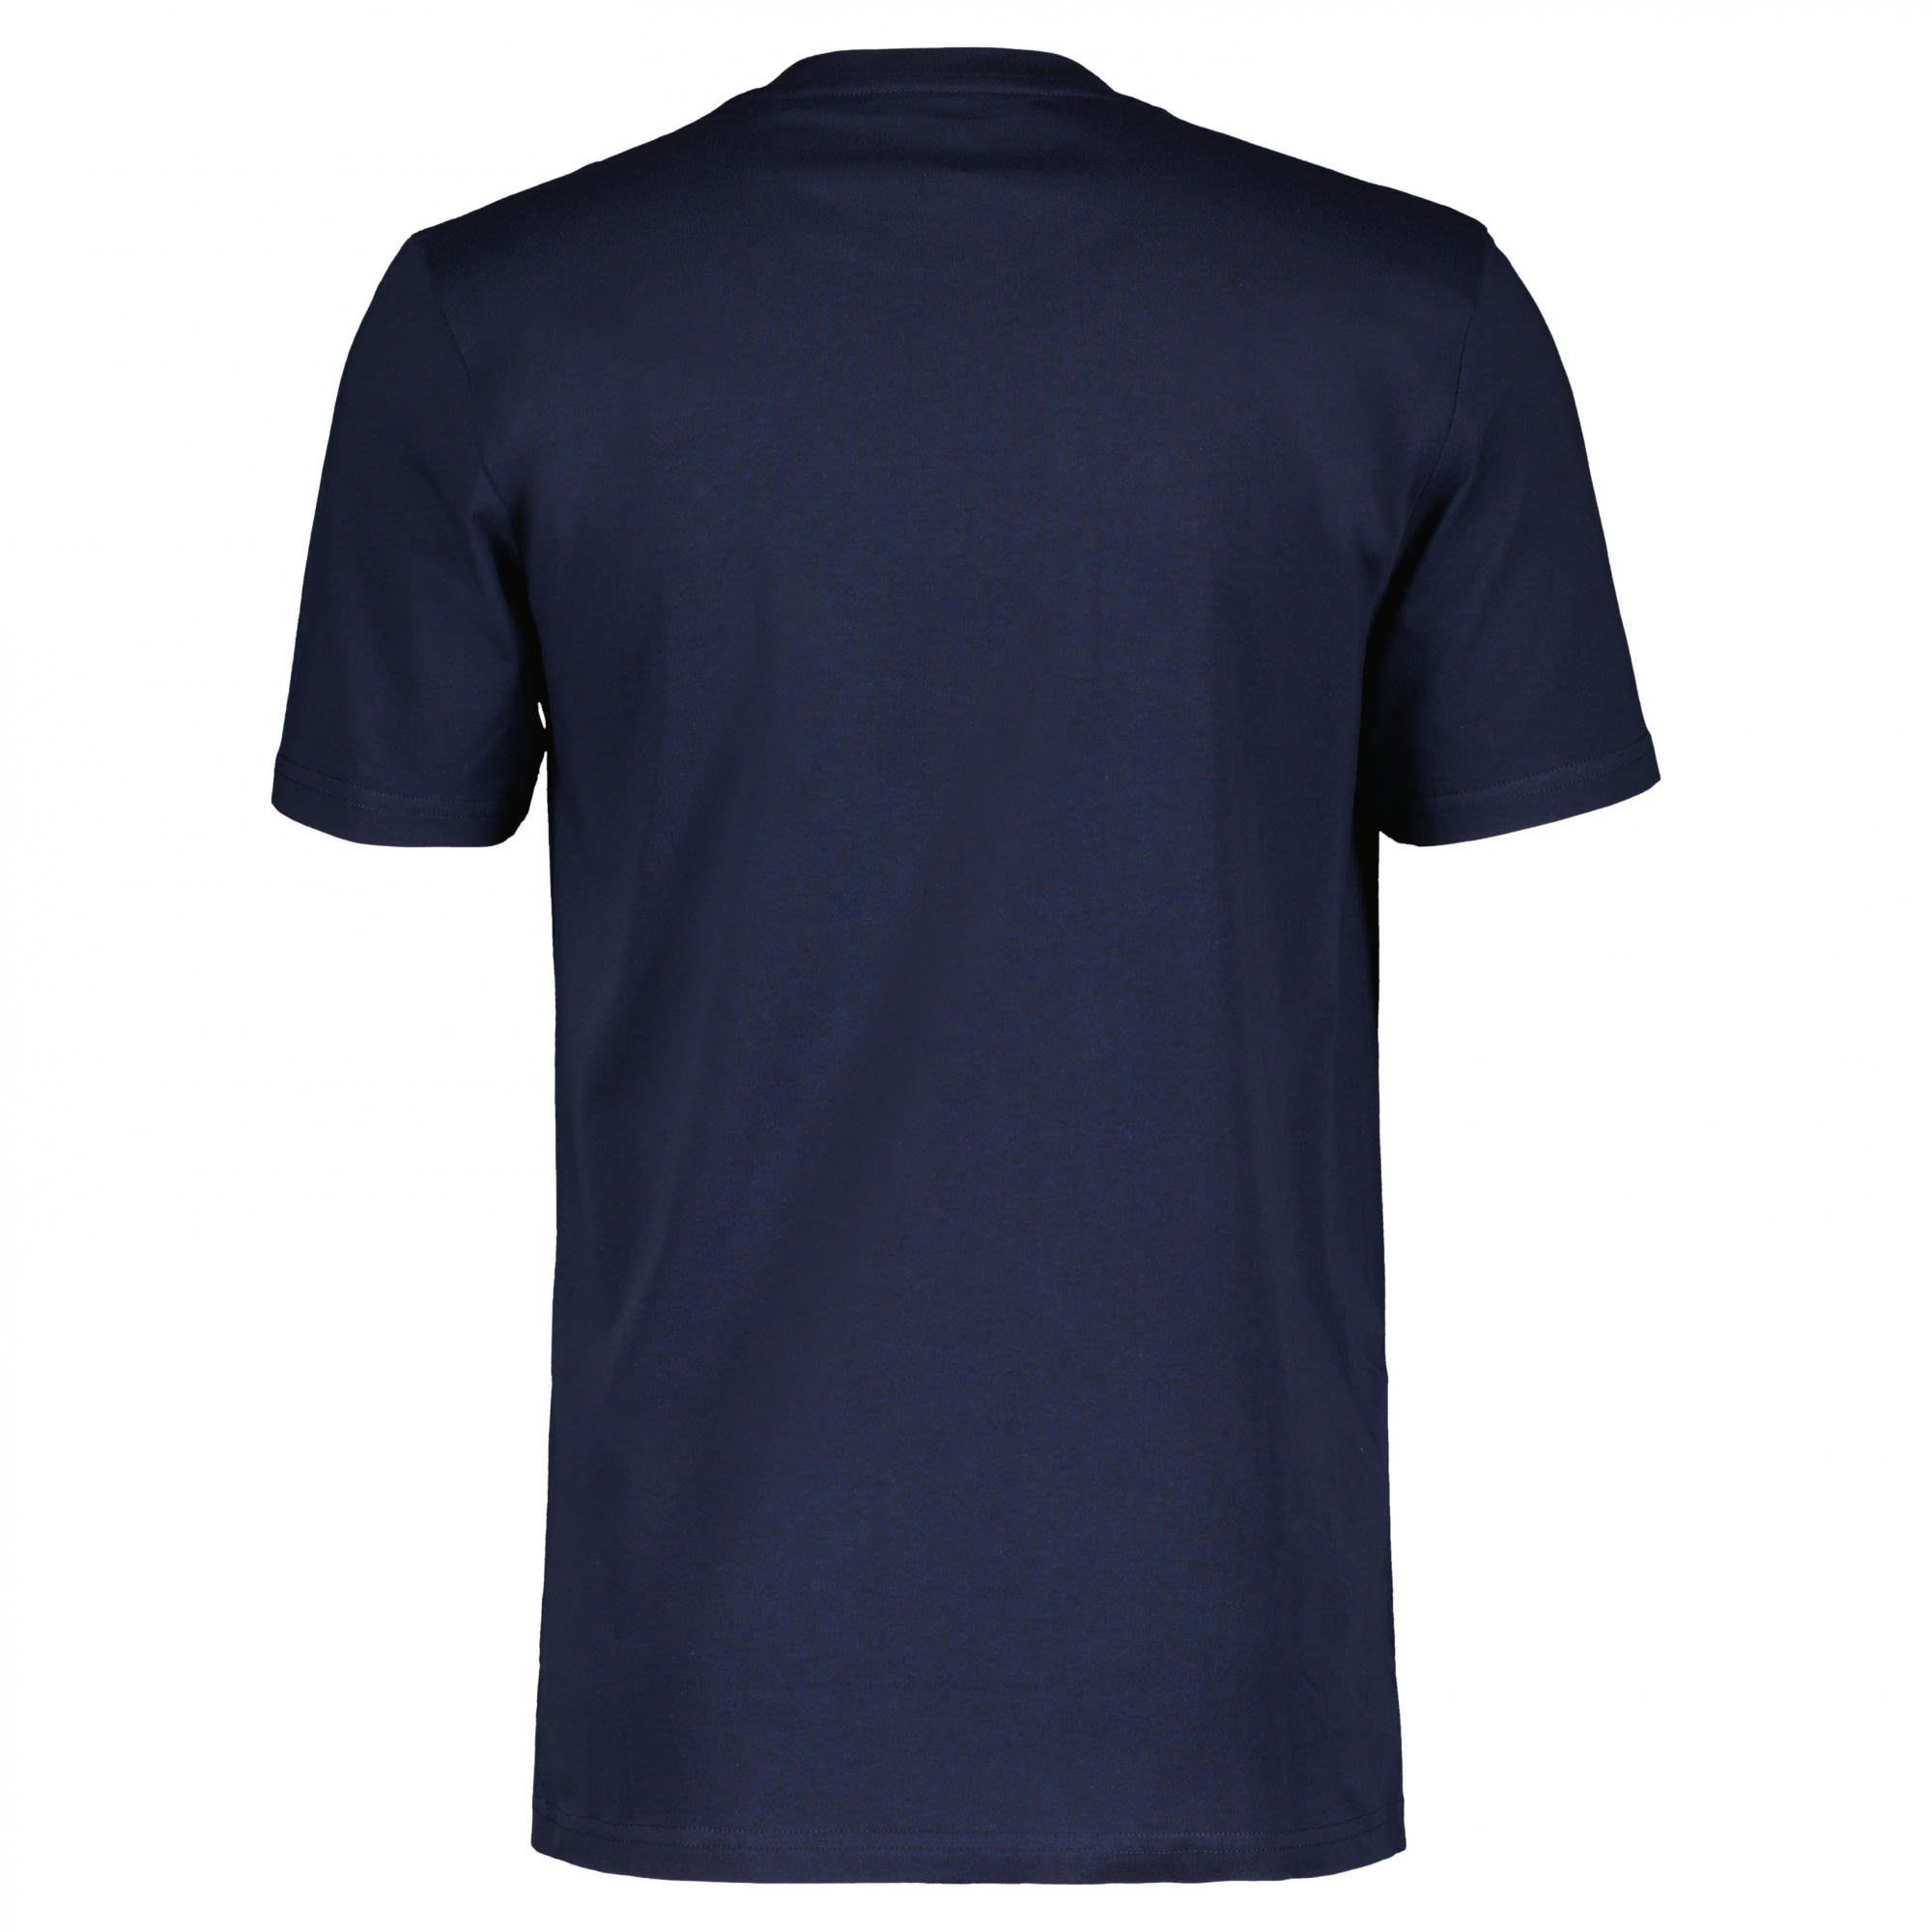 Midnight S/sl No Scott Scott Blue Shortcuts Tee Herren M T-Shirt Kurzarm-Shirt